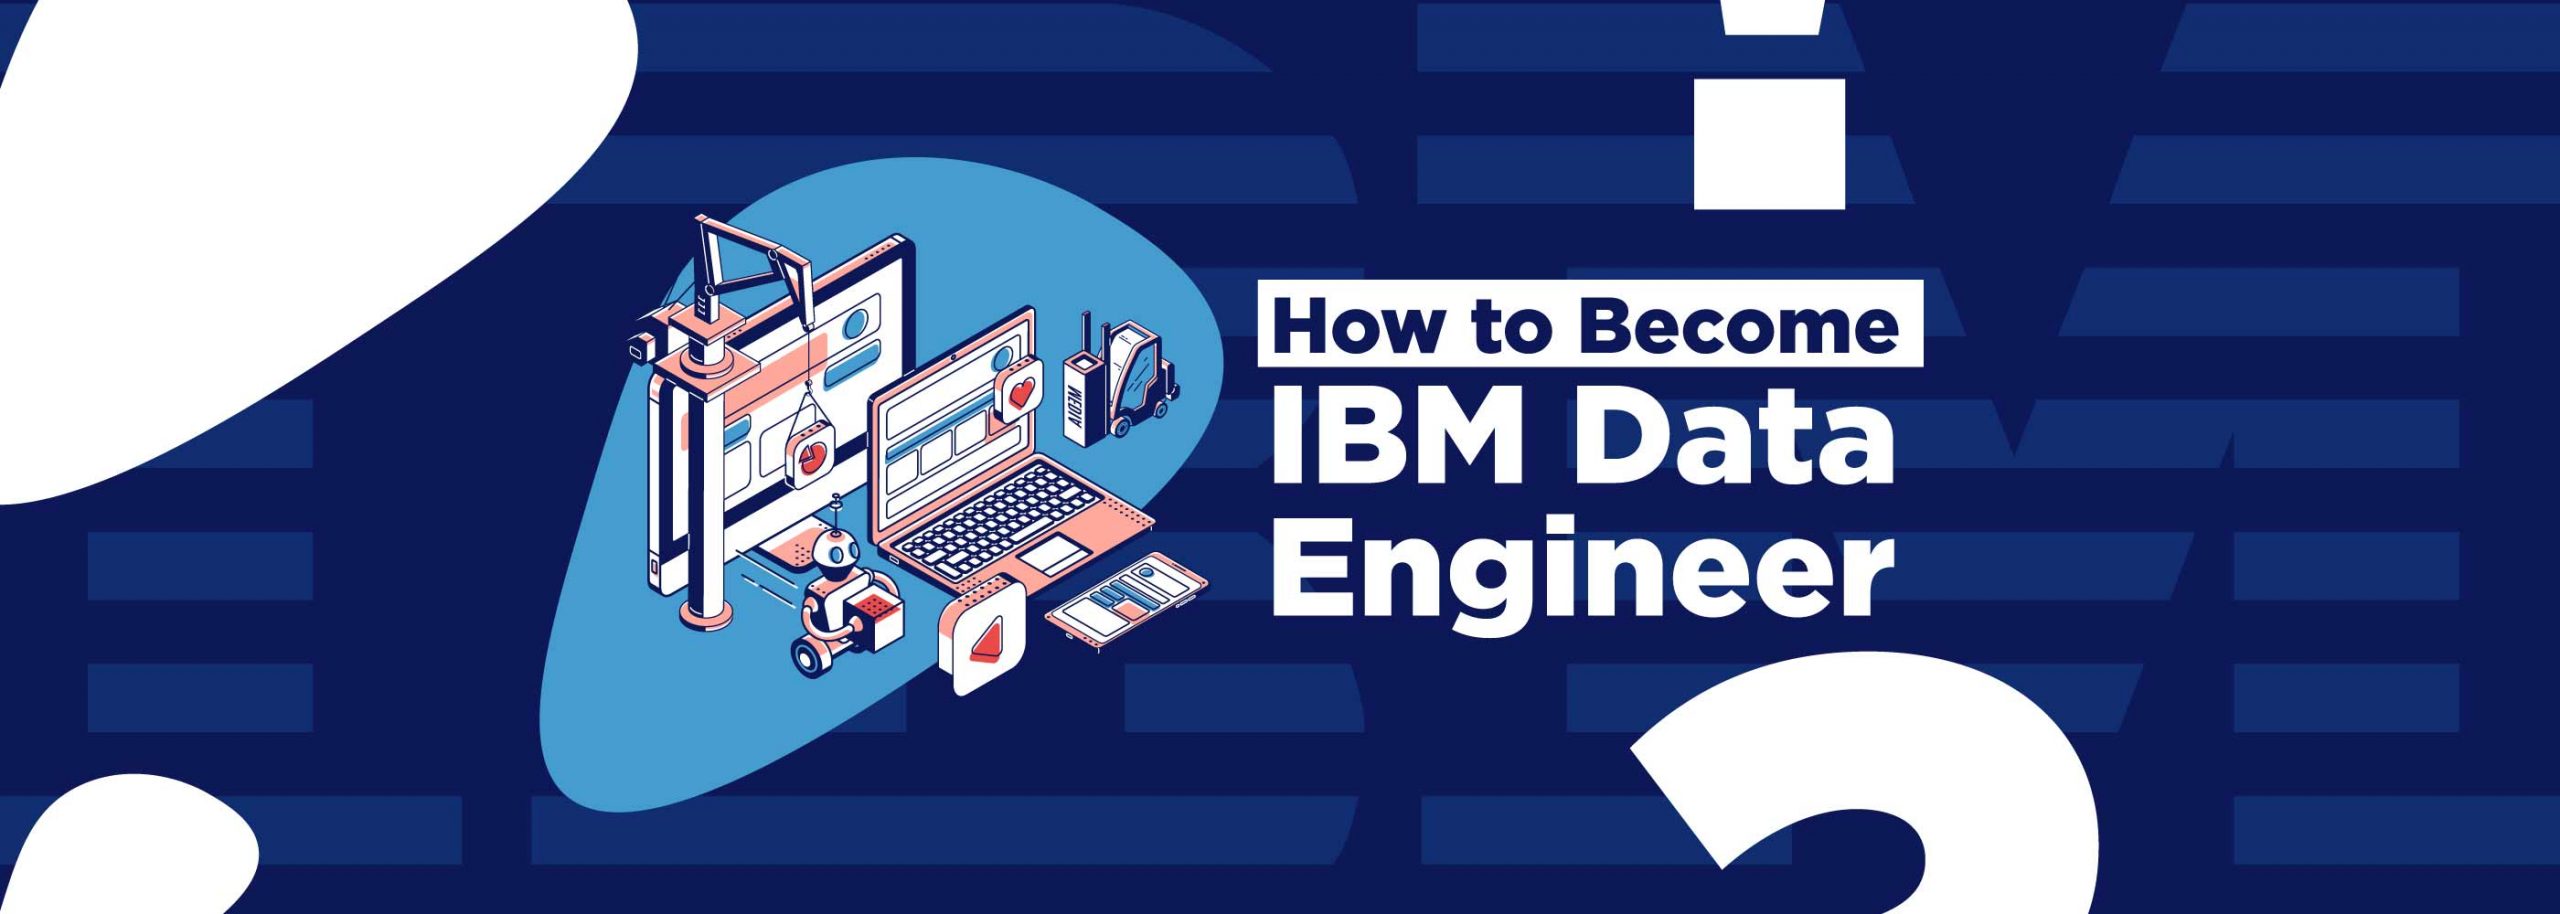 IBM Data Engineer